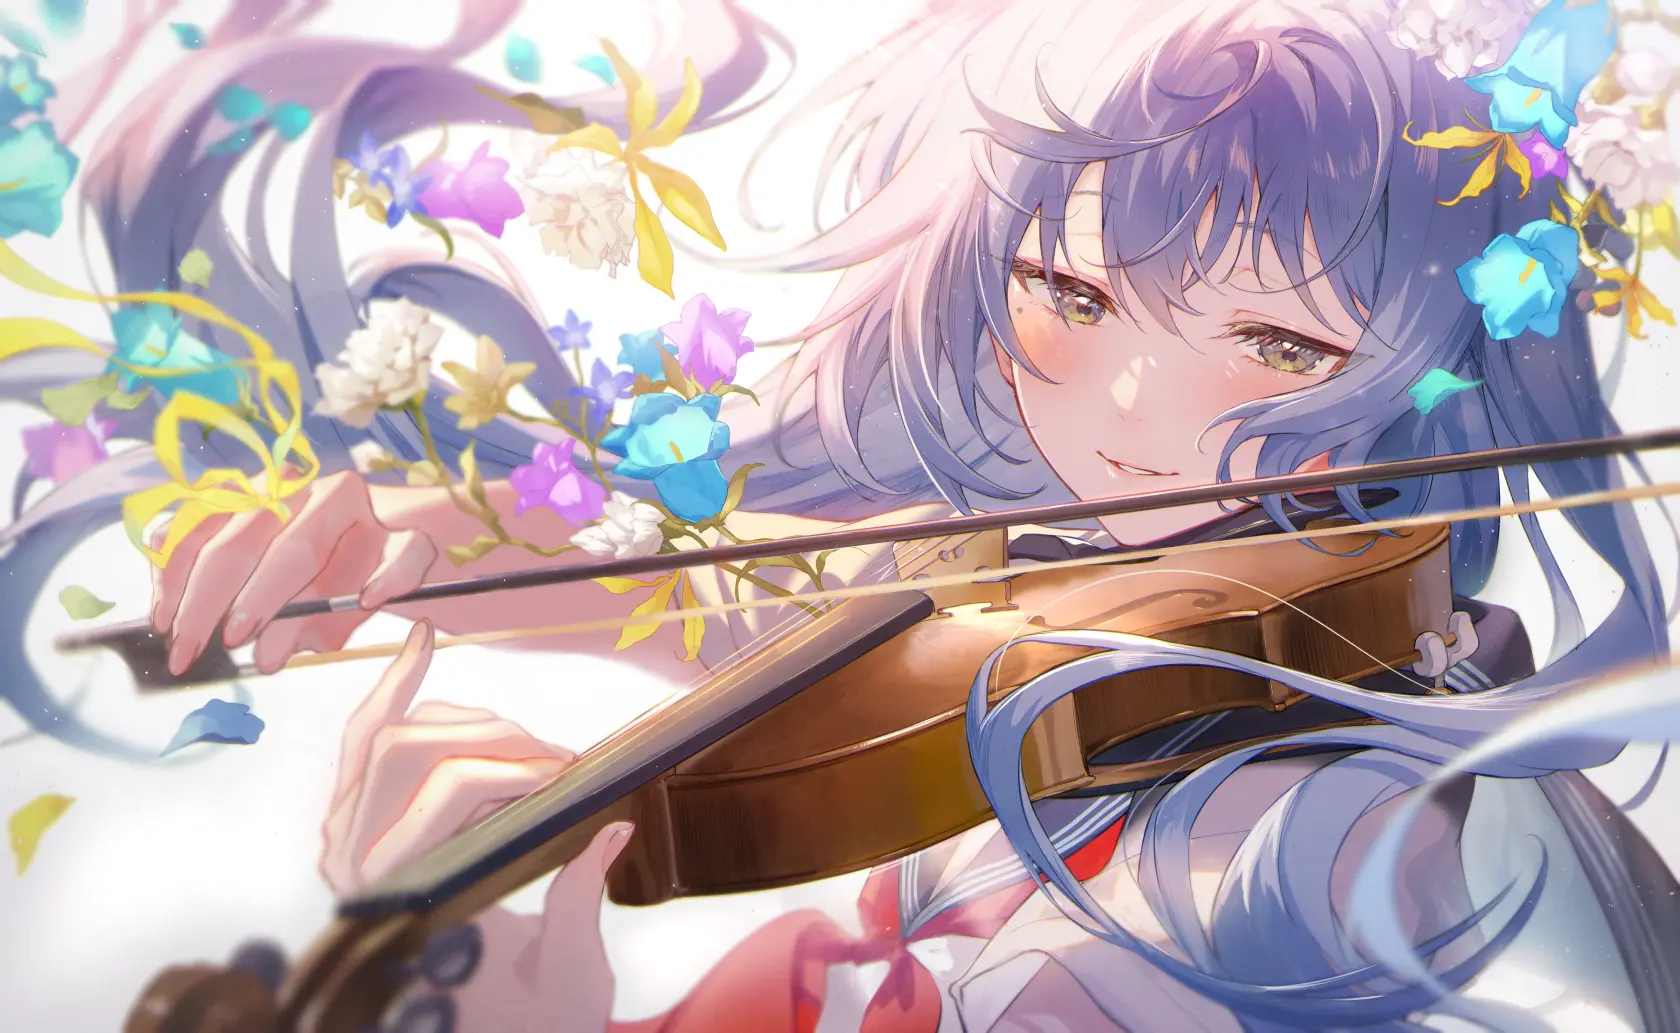 anime girl with long purple hair and violin - What is the name of the anime girl with purple hair